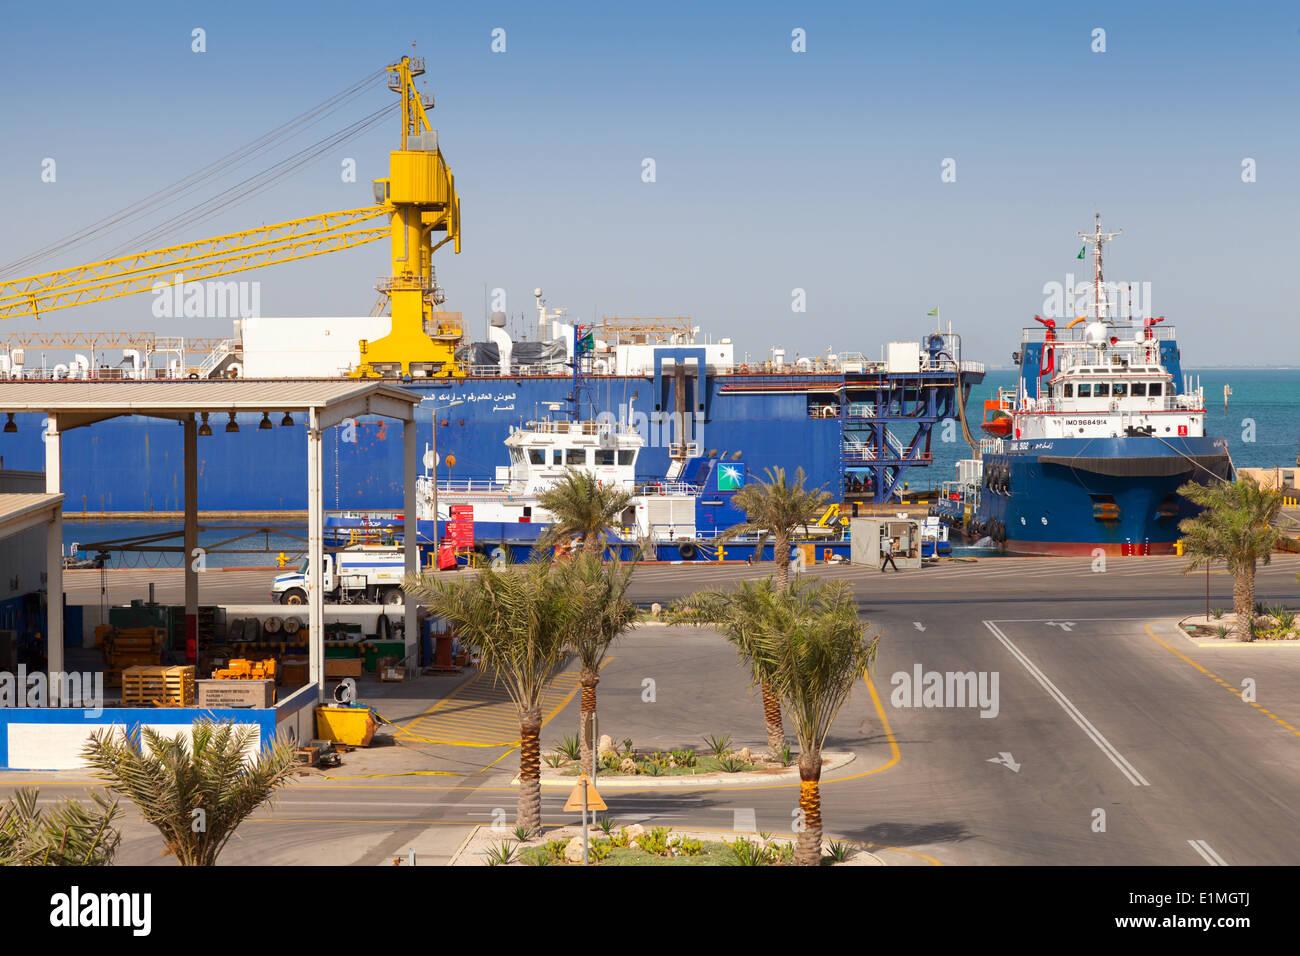 RAS TANURA, Arabia Saudita - 14 Maggio 2014: vista sul porto con navi ormeggiate, Arabia Saudita Foto Stock